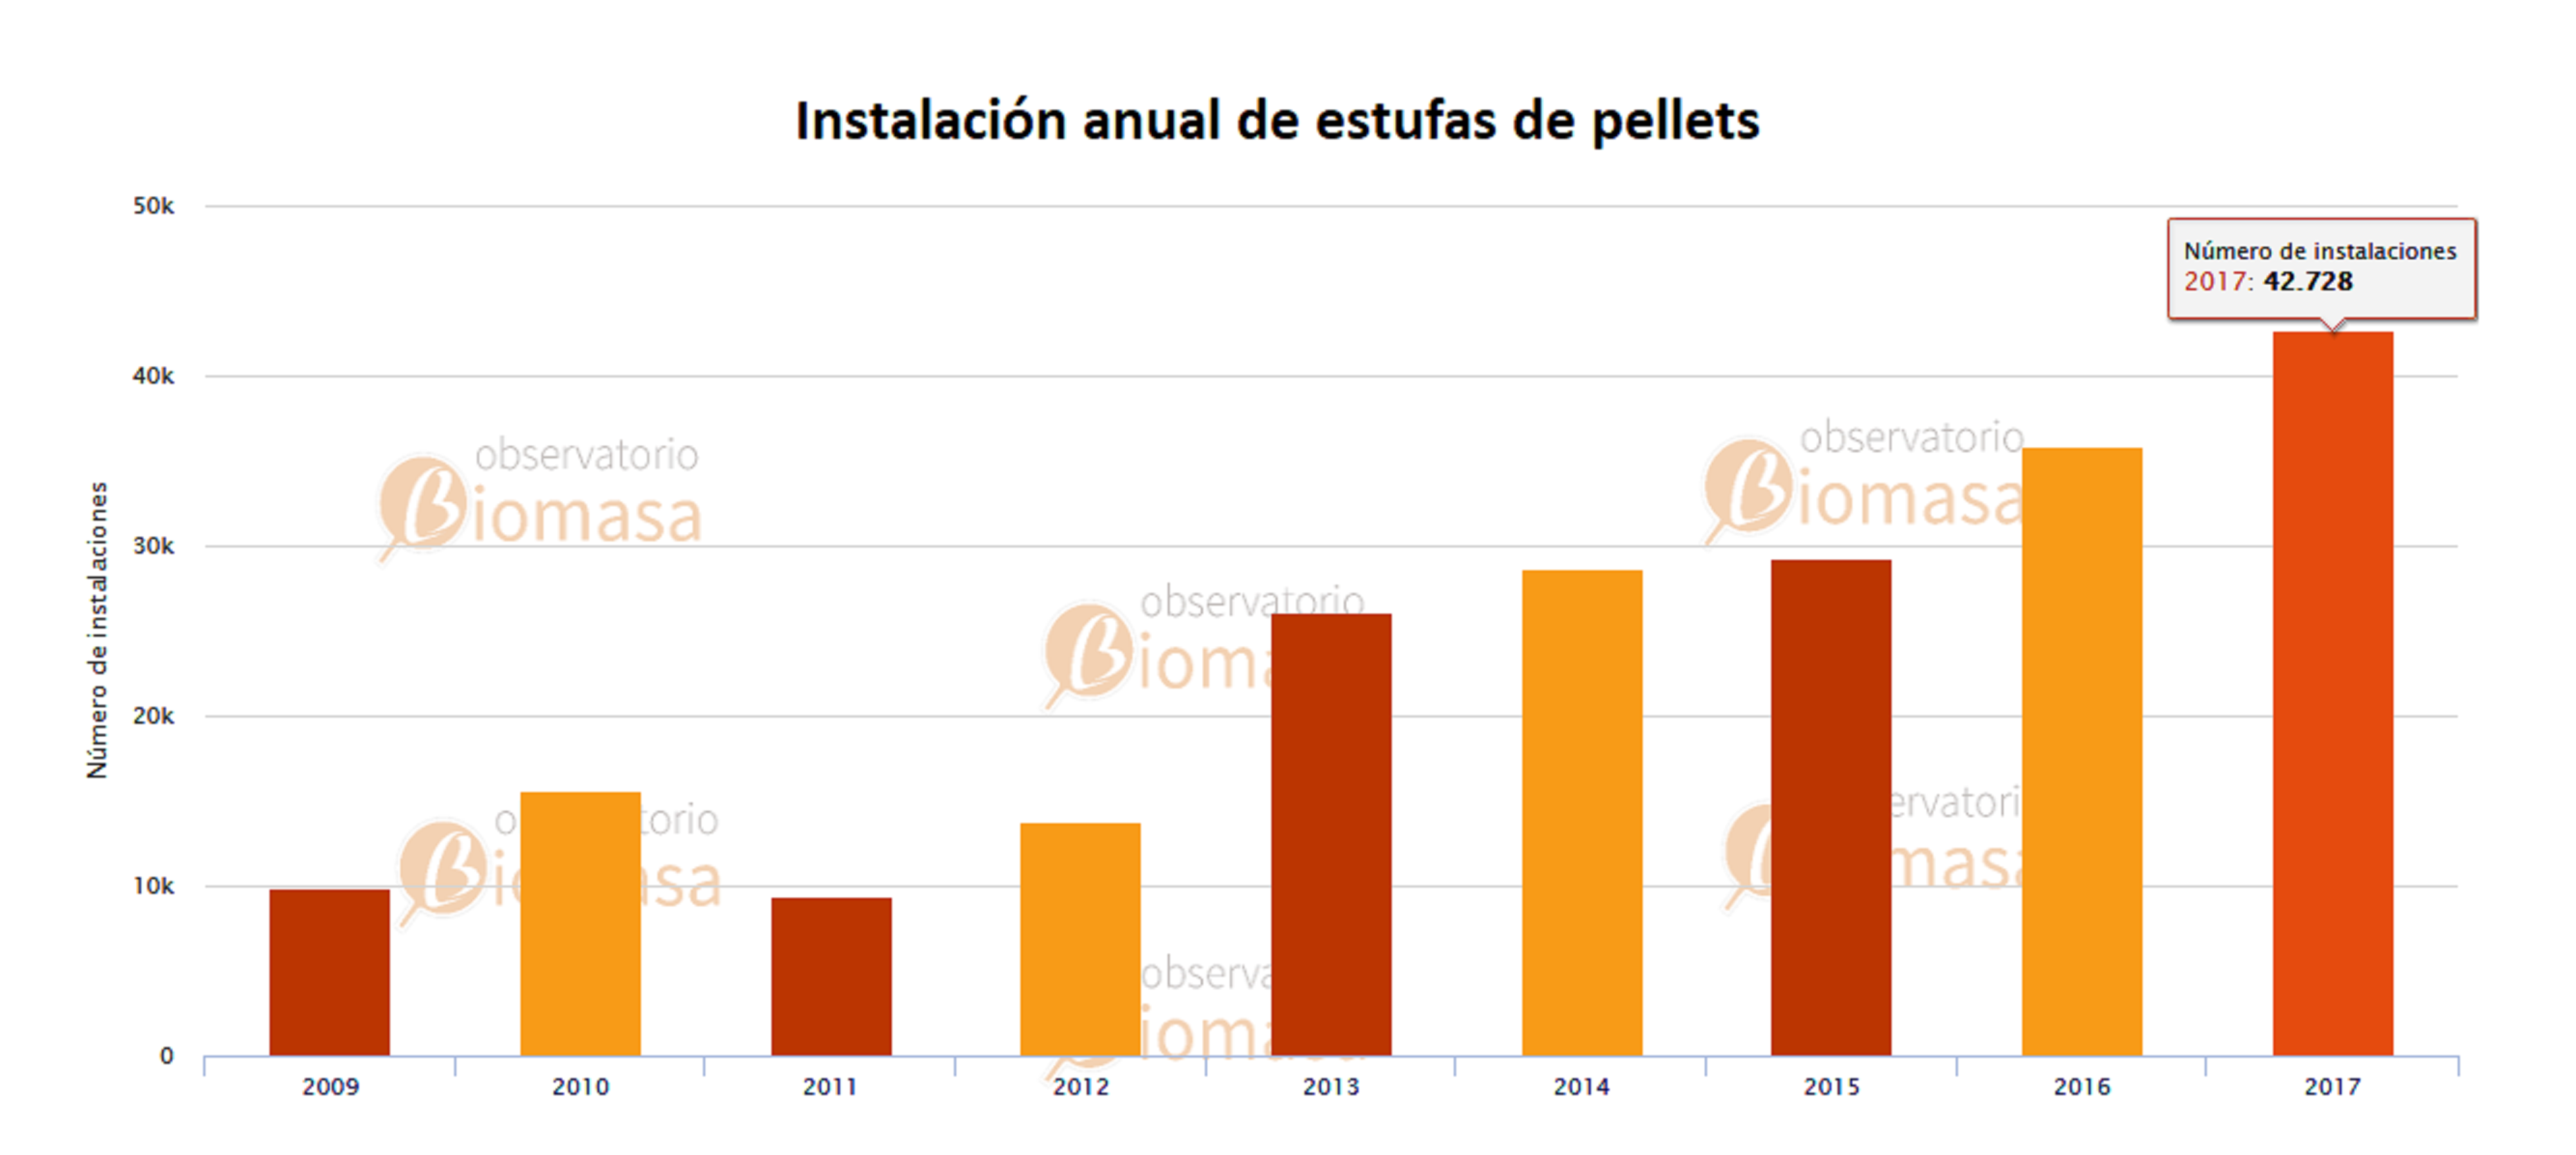 Evolution of the installation of pellet stoves